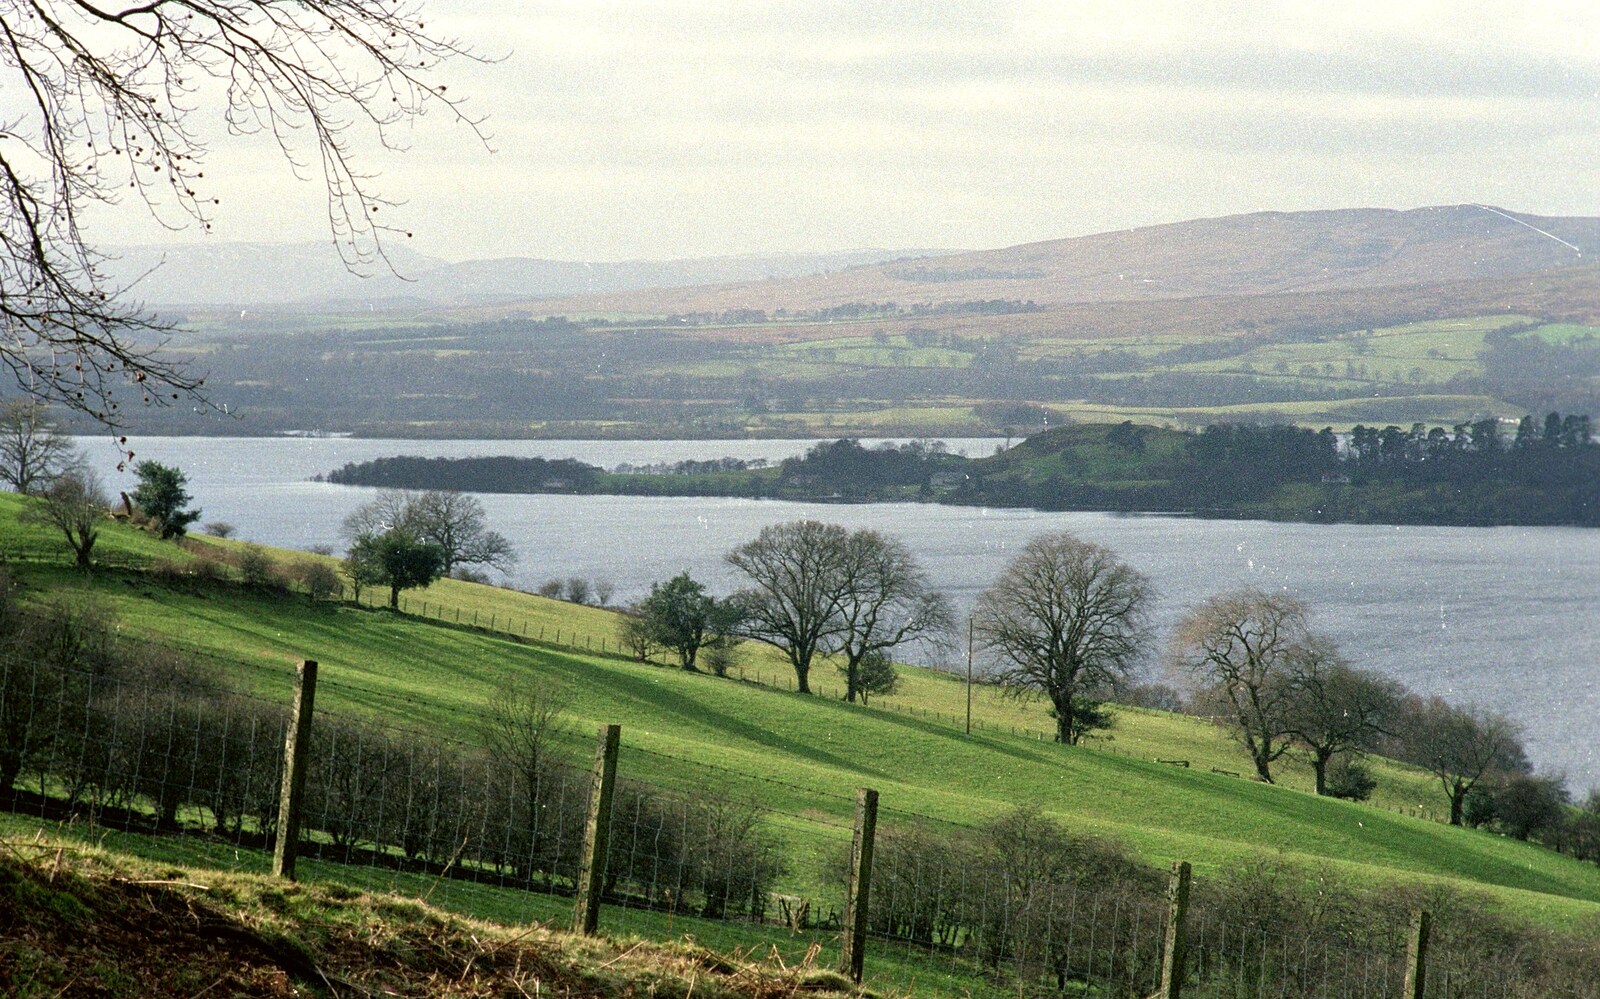 Another Loch Lomond scene from Sandbach to Loch Lomond, Cheshire and Scotland - 10th December 1987